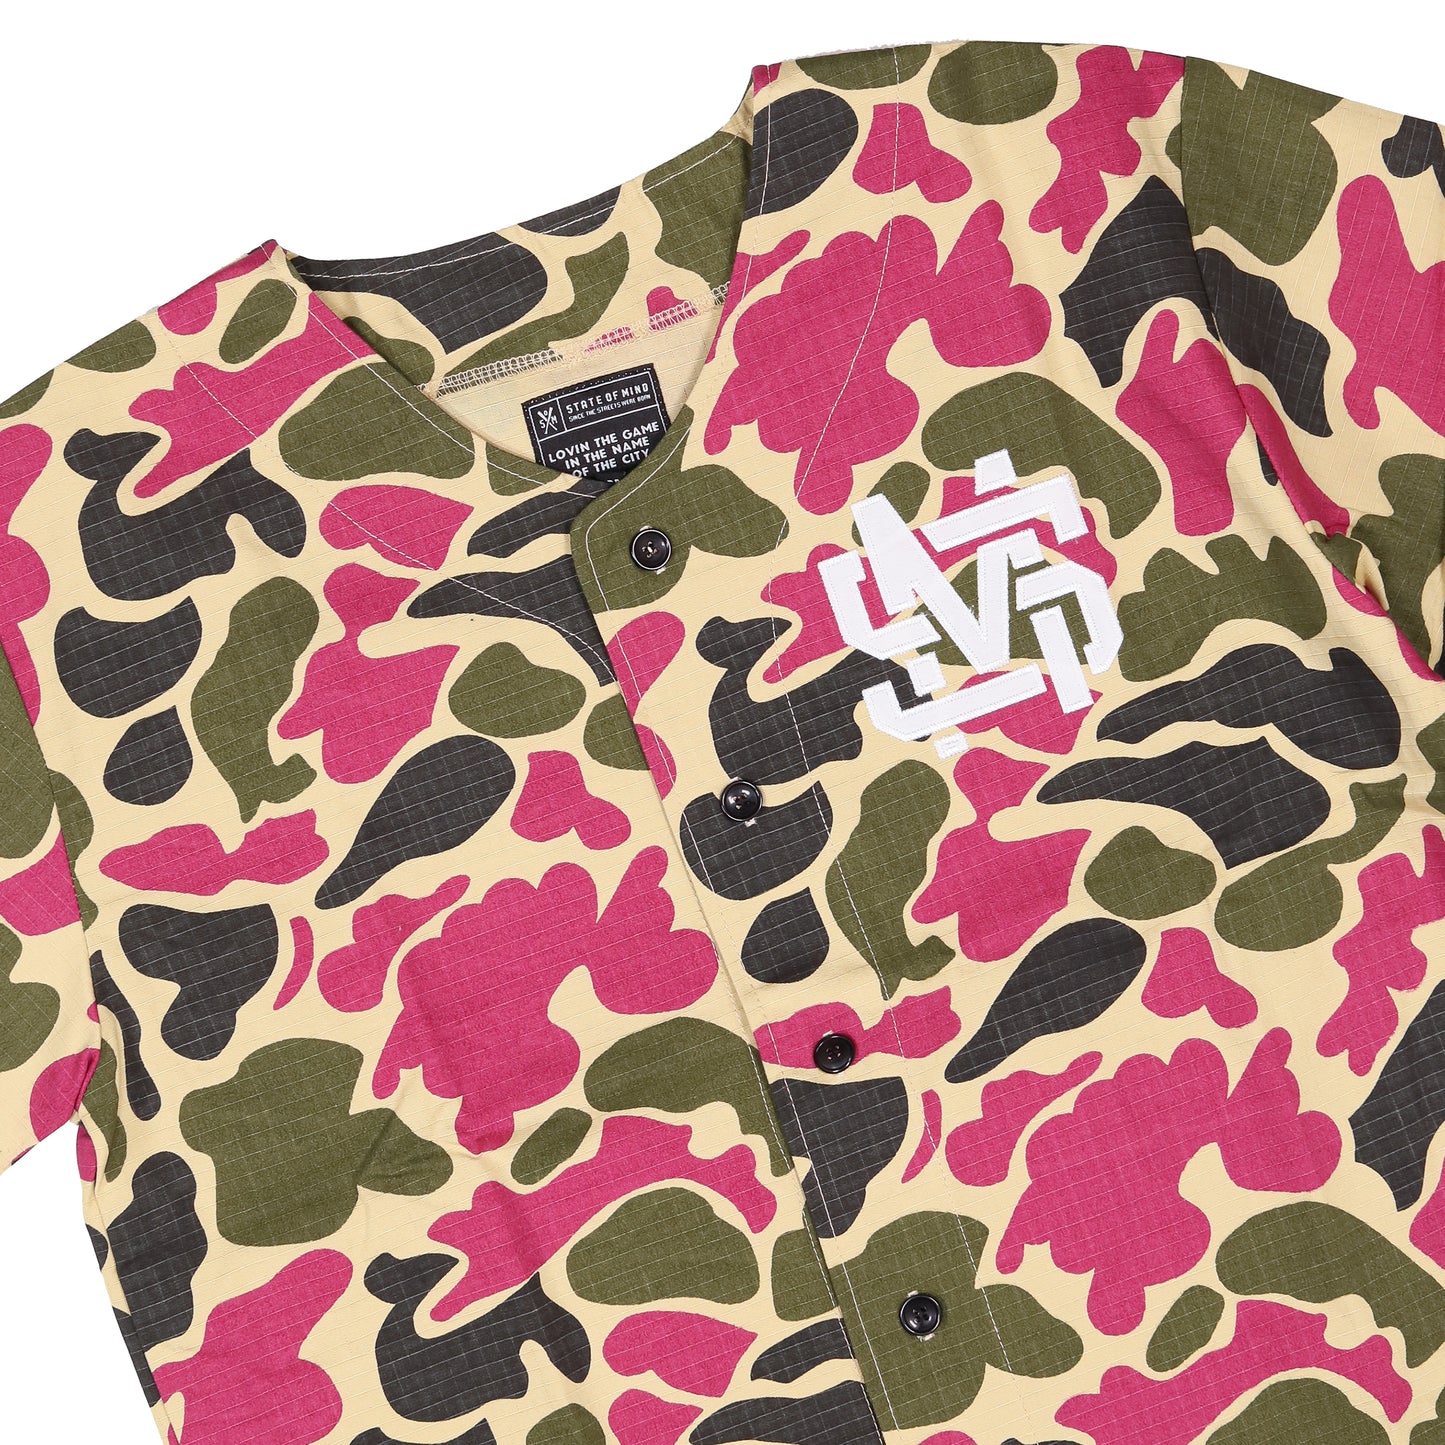 " MONOGRAM " Ripstop Baseball Shirt Camouflage